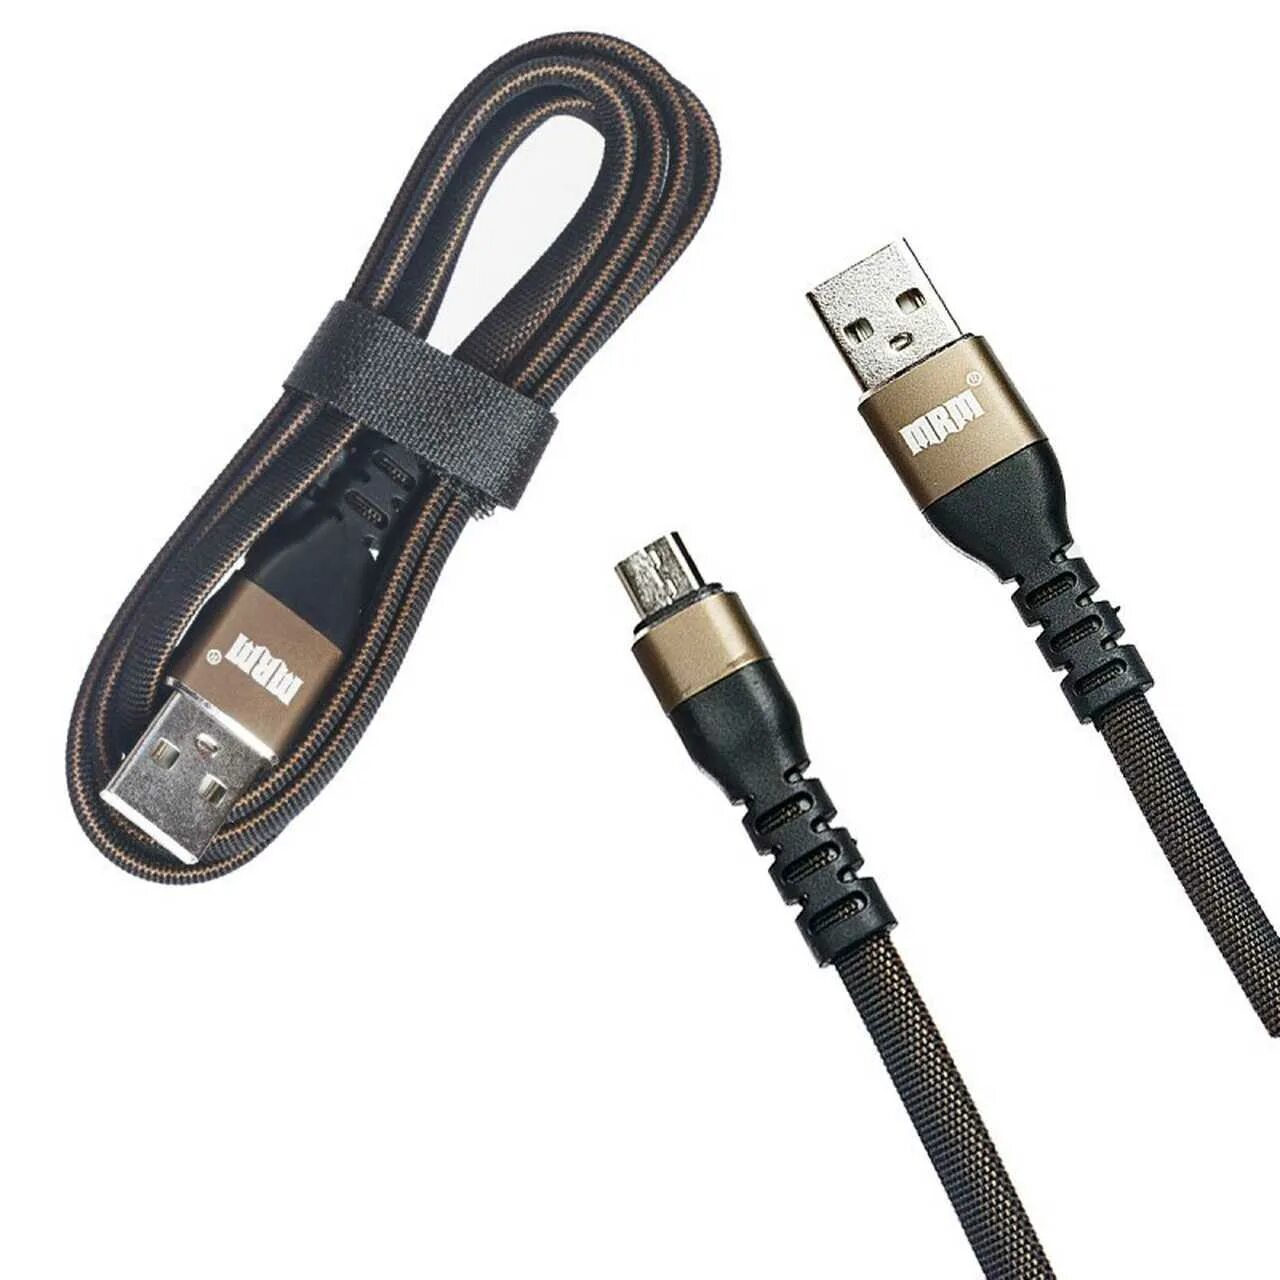 Mr 34. Borofone кабель USB-MICROUSB тканевый. Кабель USB XB x35m Micro. Кабель USB mr04m Micro 1000mm (длинный штекер) (Black). Кабель USB MRM mr93t Type-c 2000mm (Black).